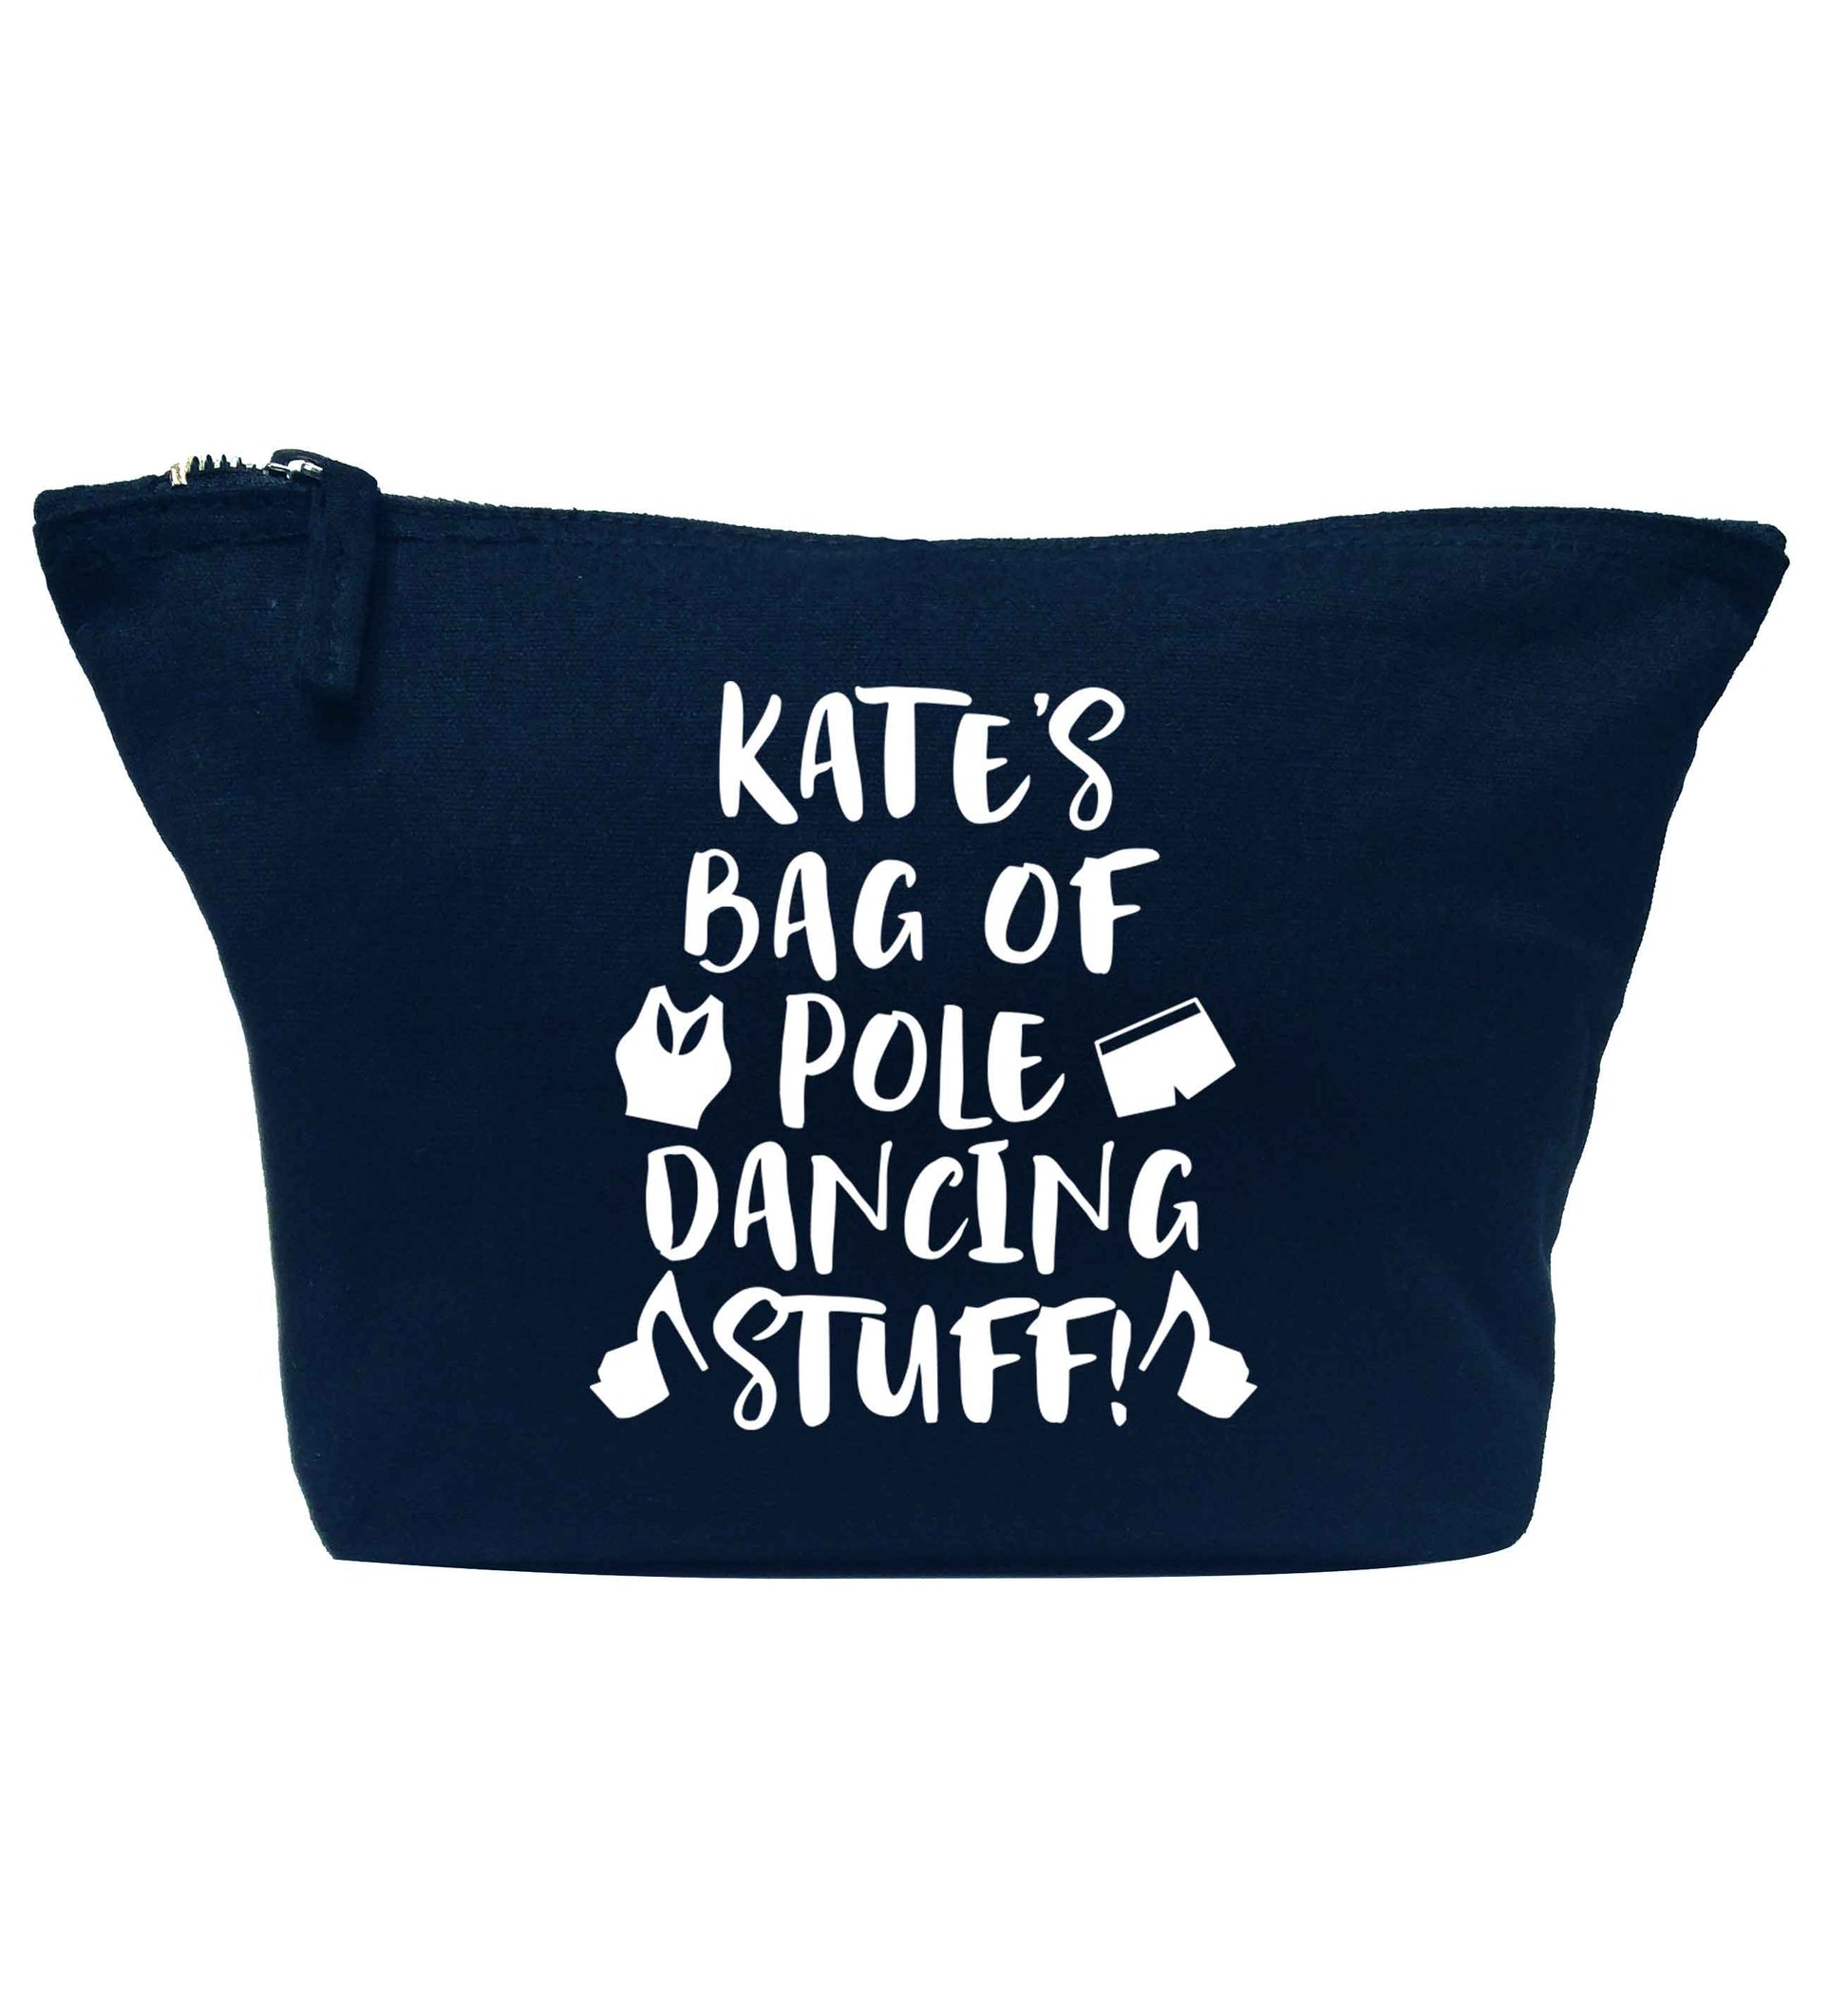 Best Things Happen Dancing navy makeup bag